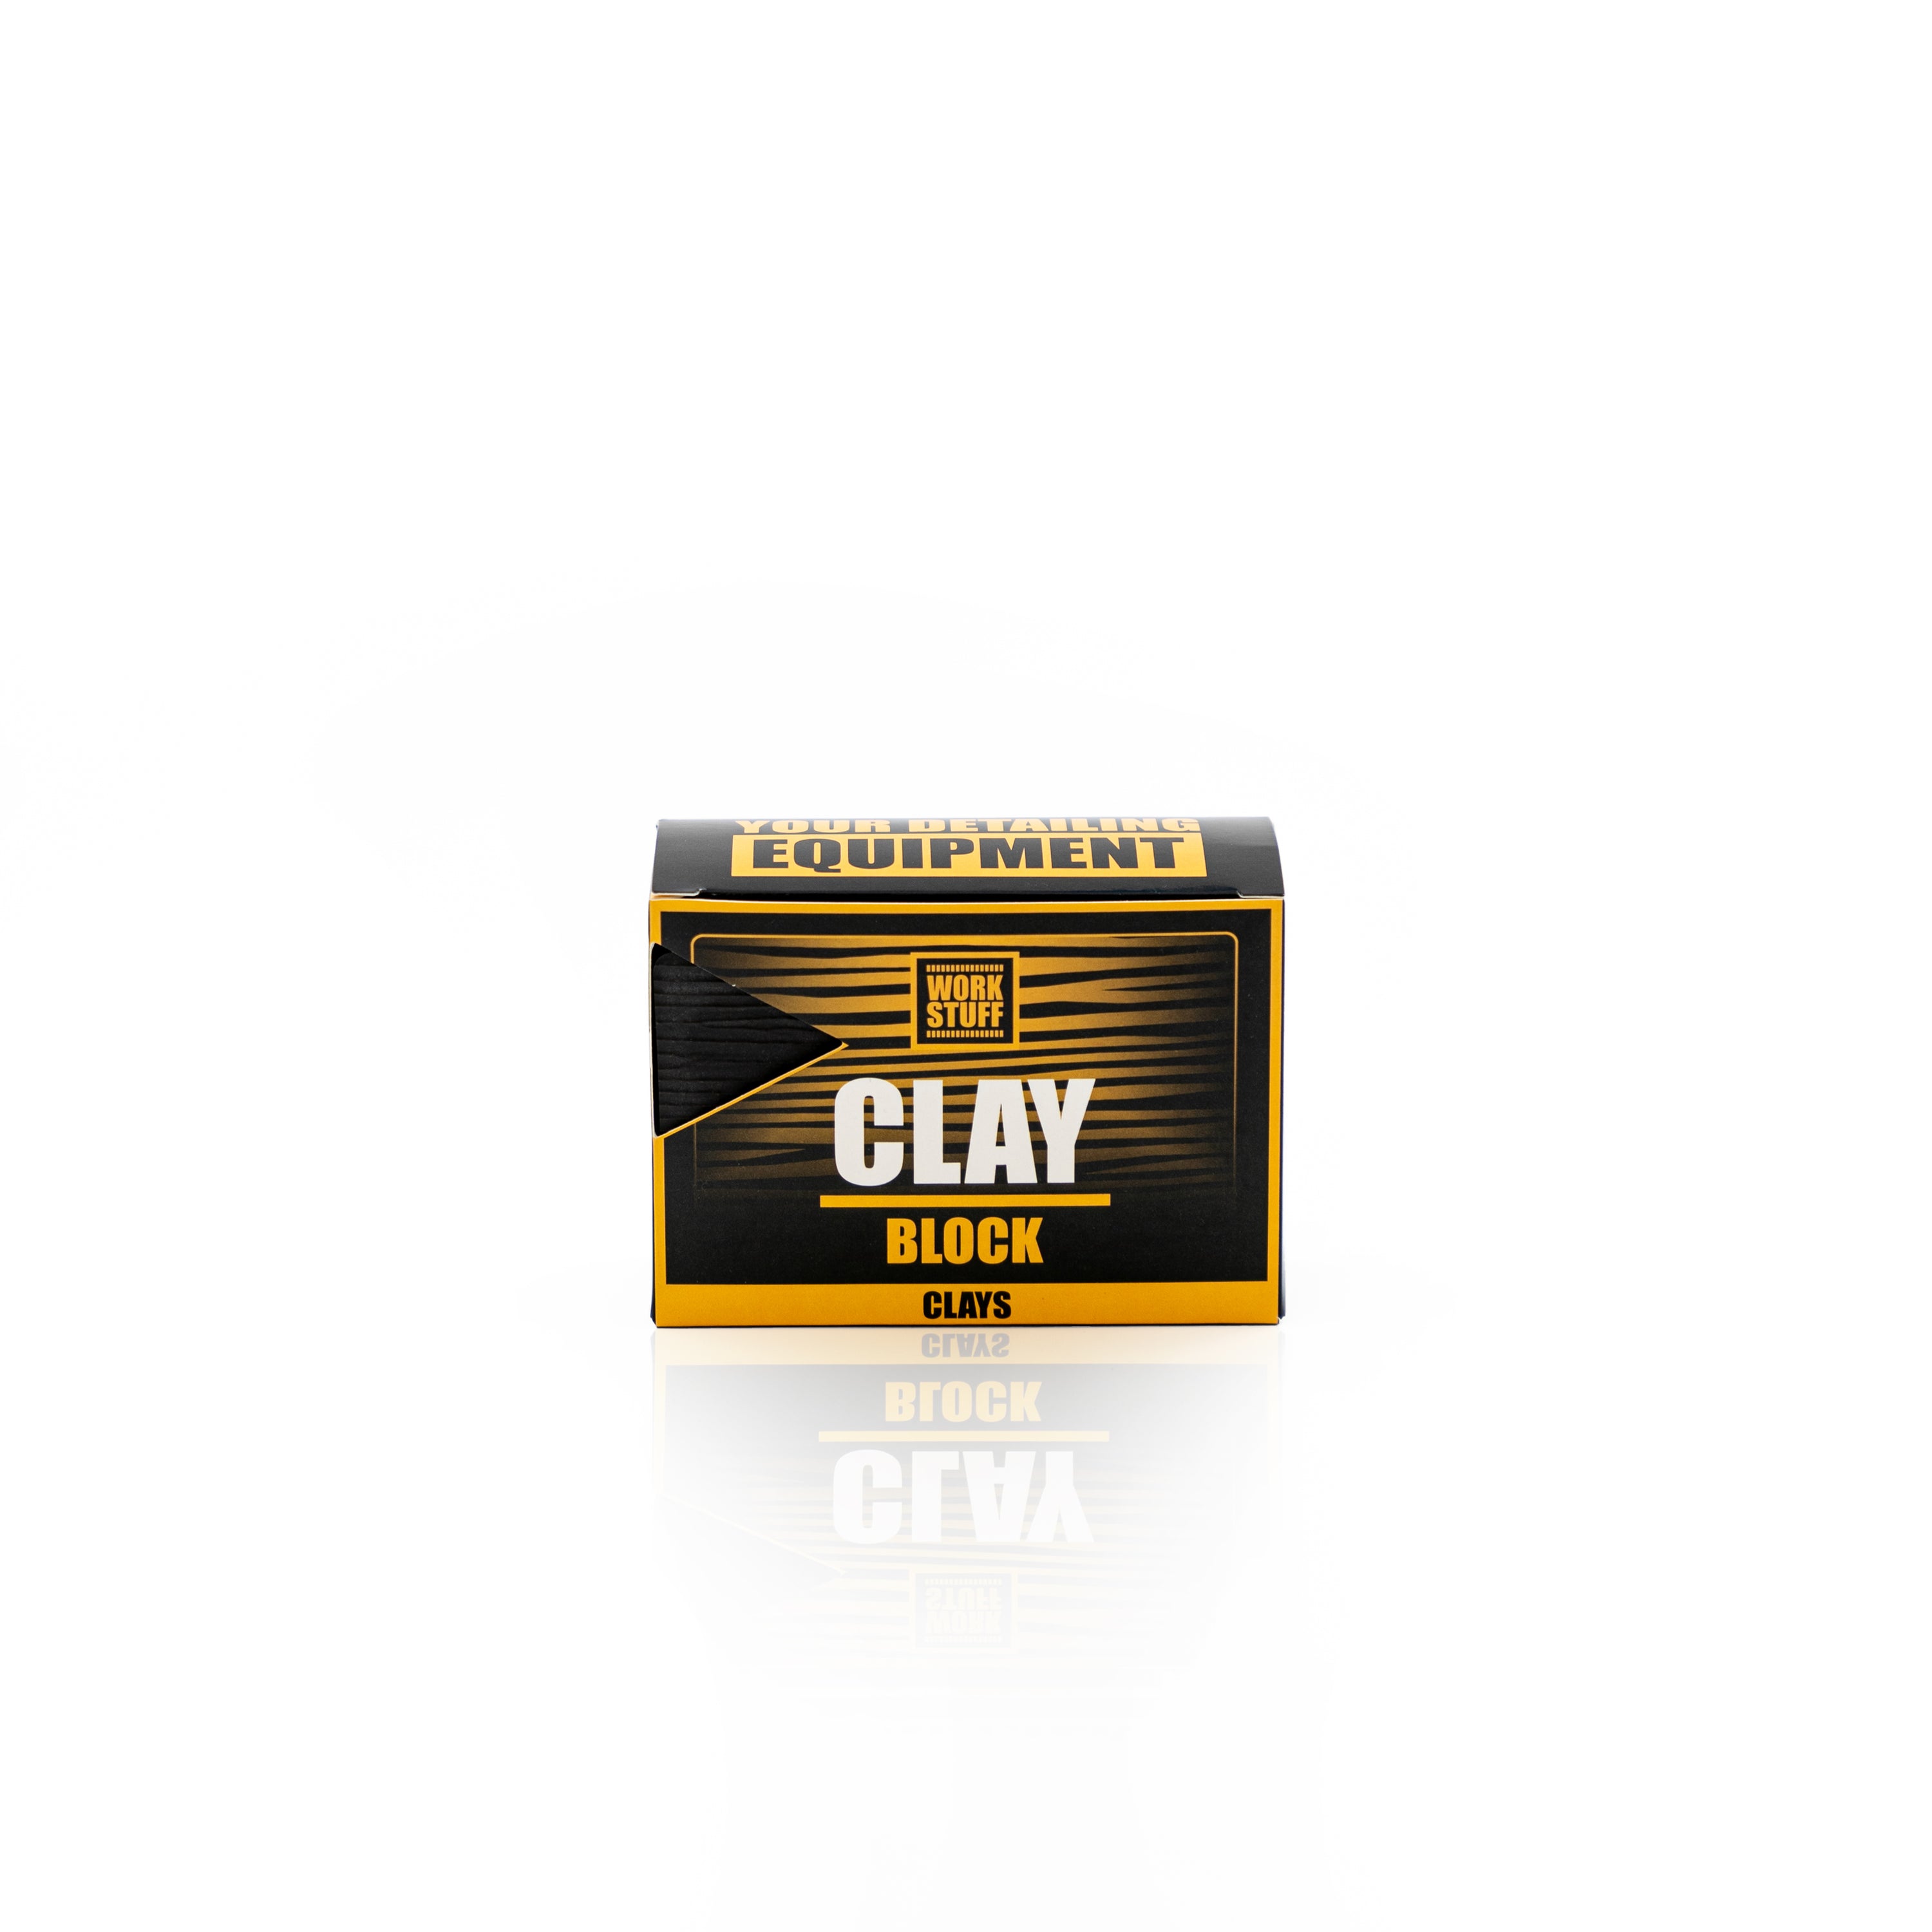 WORKSTUFF - Clay Block (Bloc de décontamination)